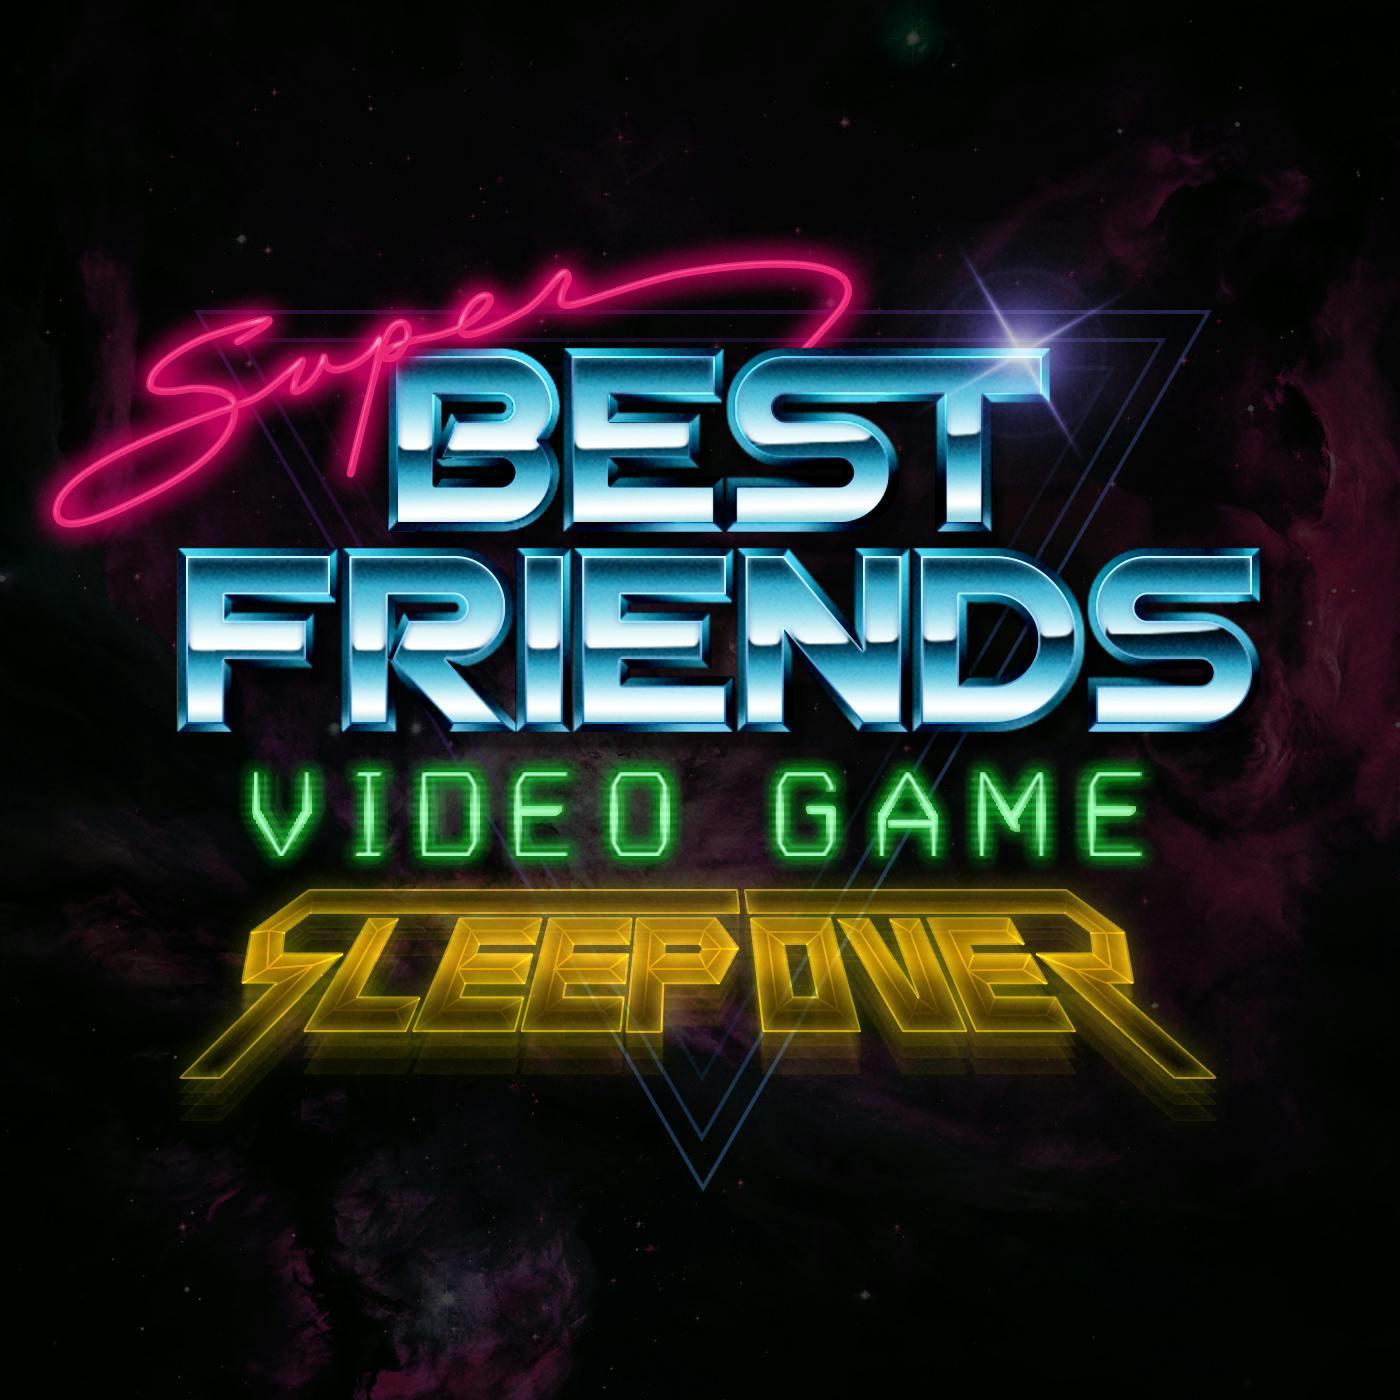 Super Best Friends Video Game Sleepover - Episode 51